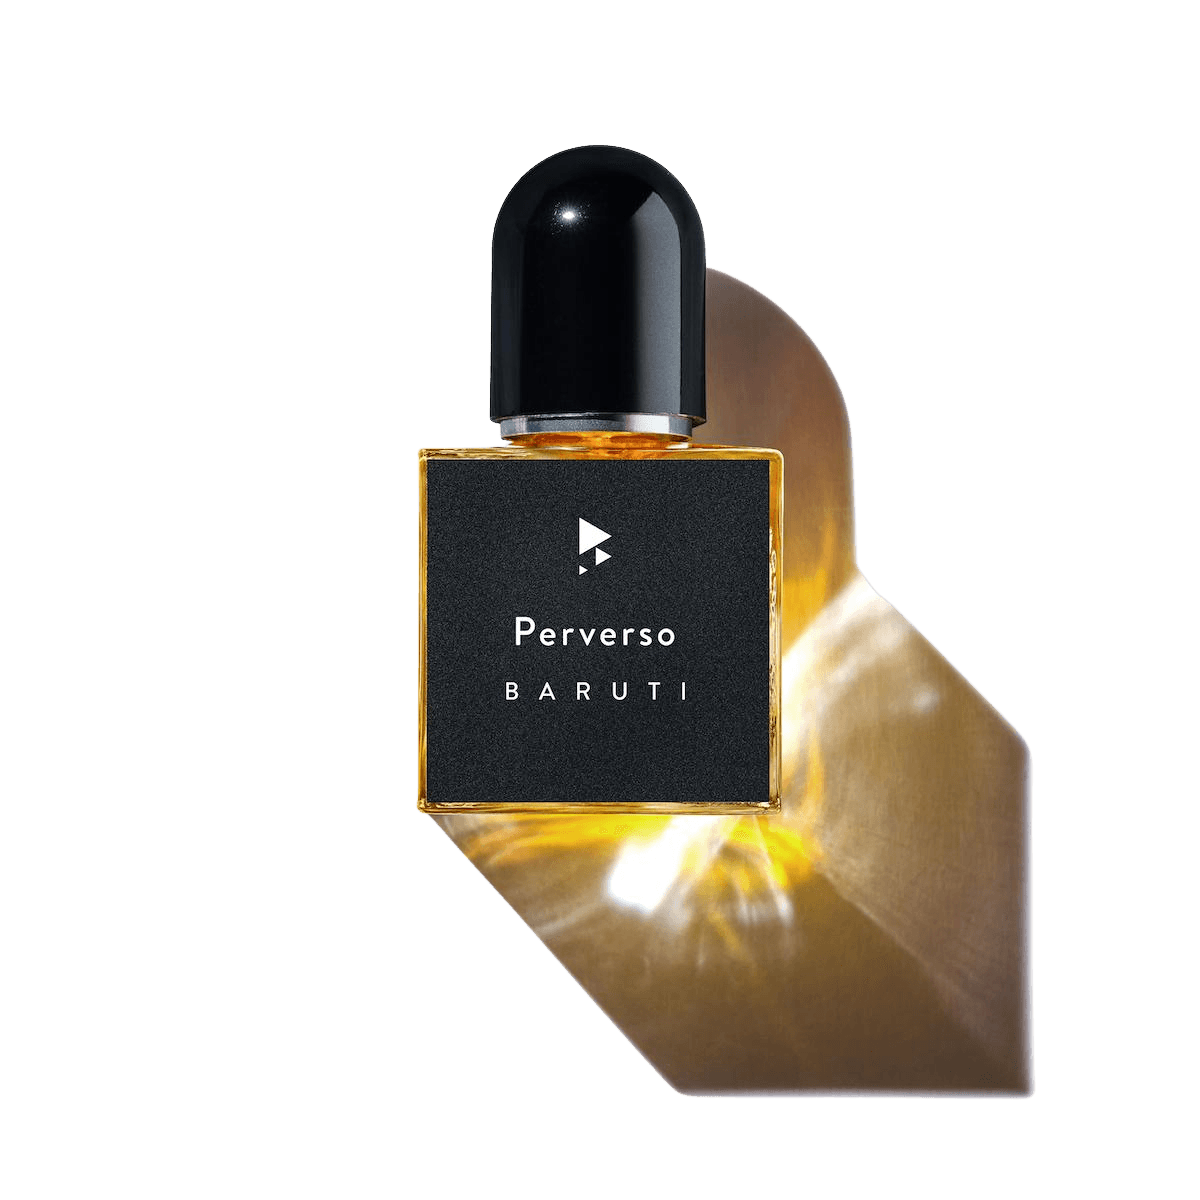 Image of the perfume Perverso by the brand Baruti